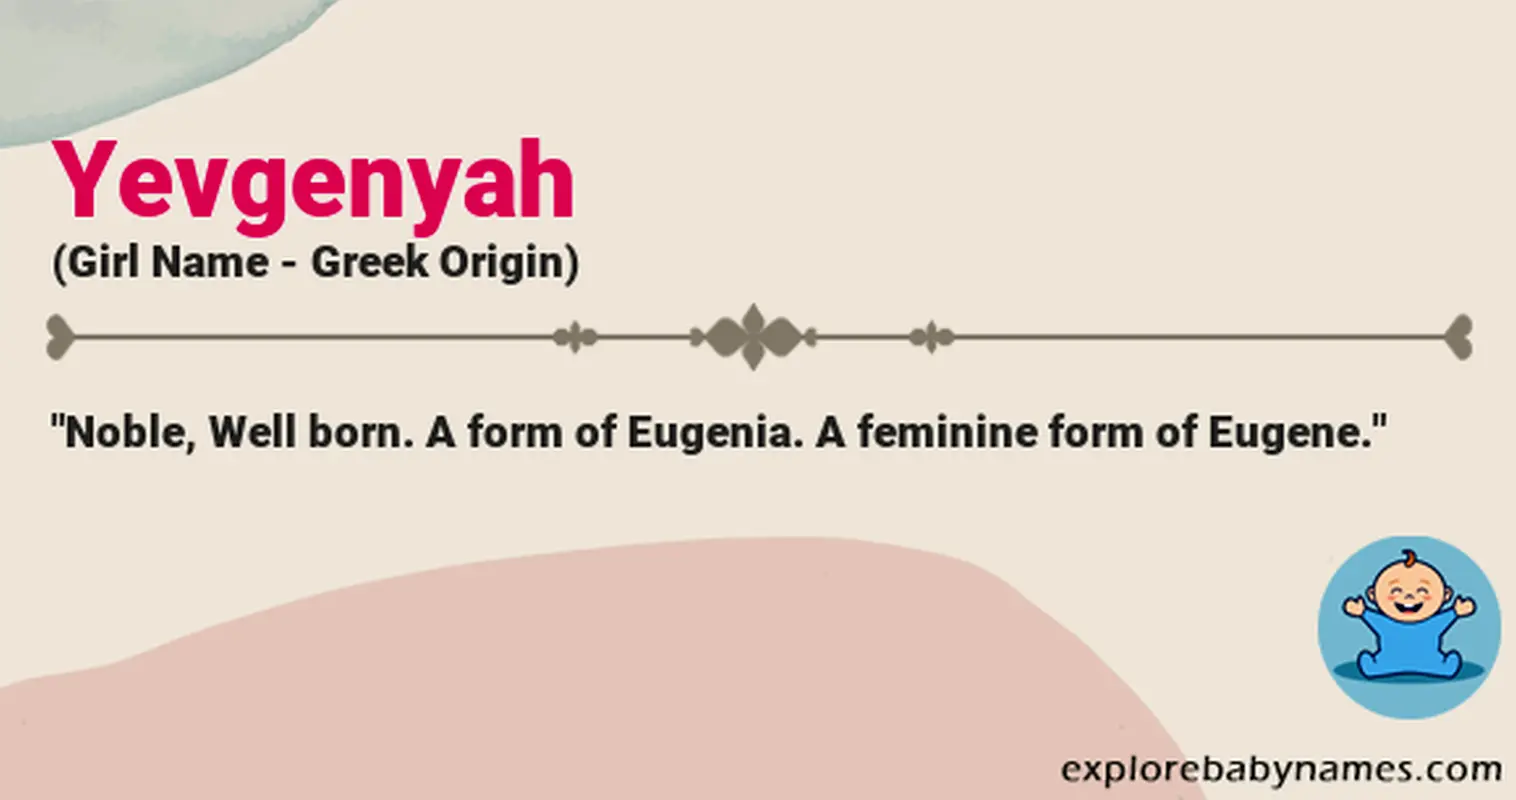 Meaning of Yevgenyah